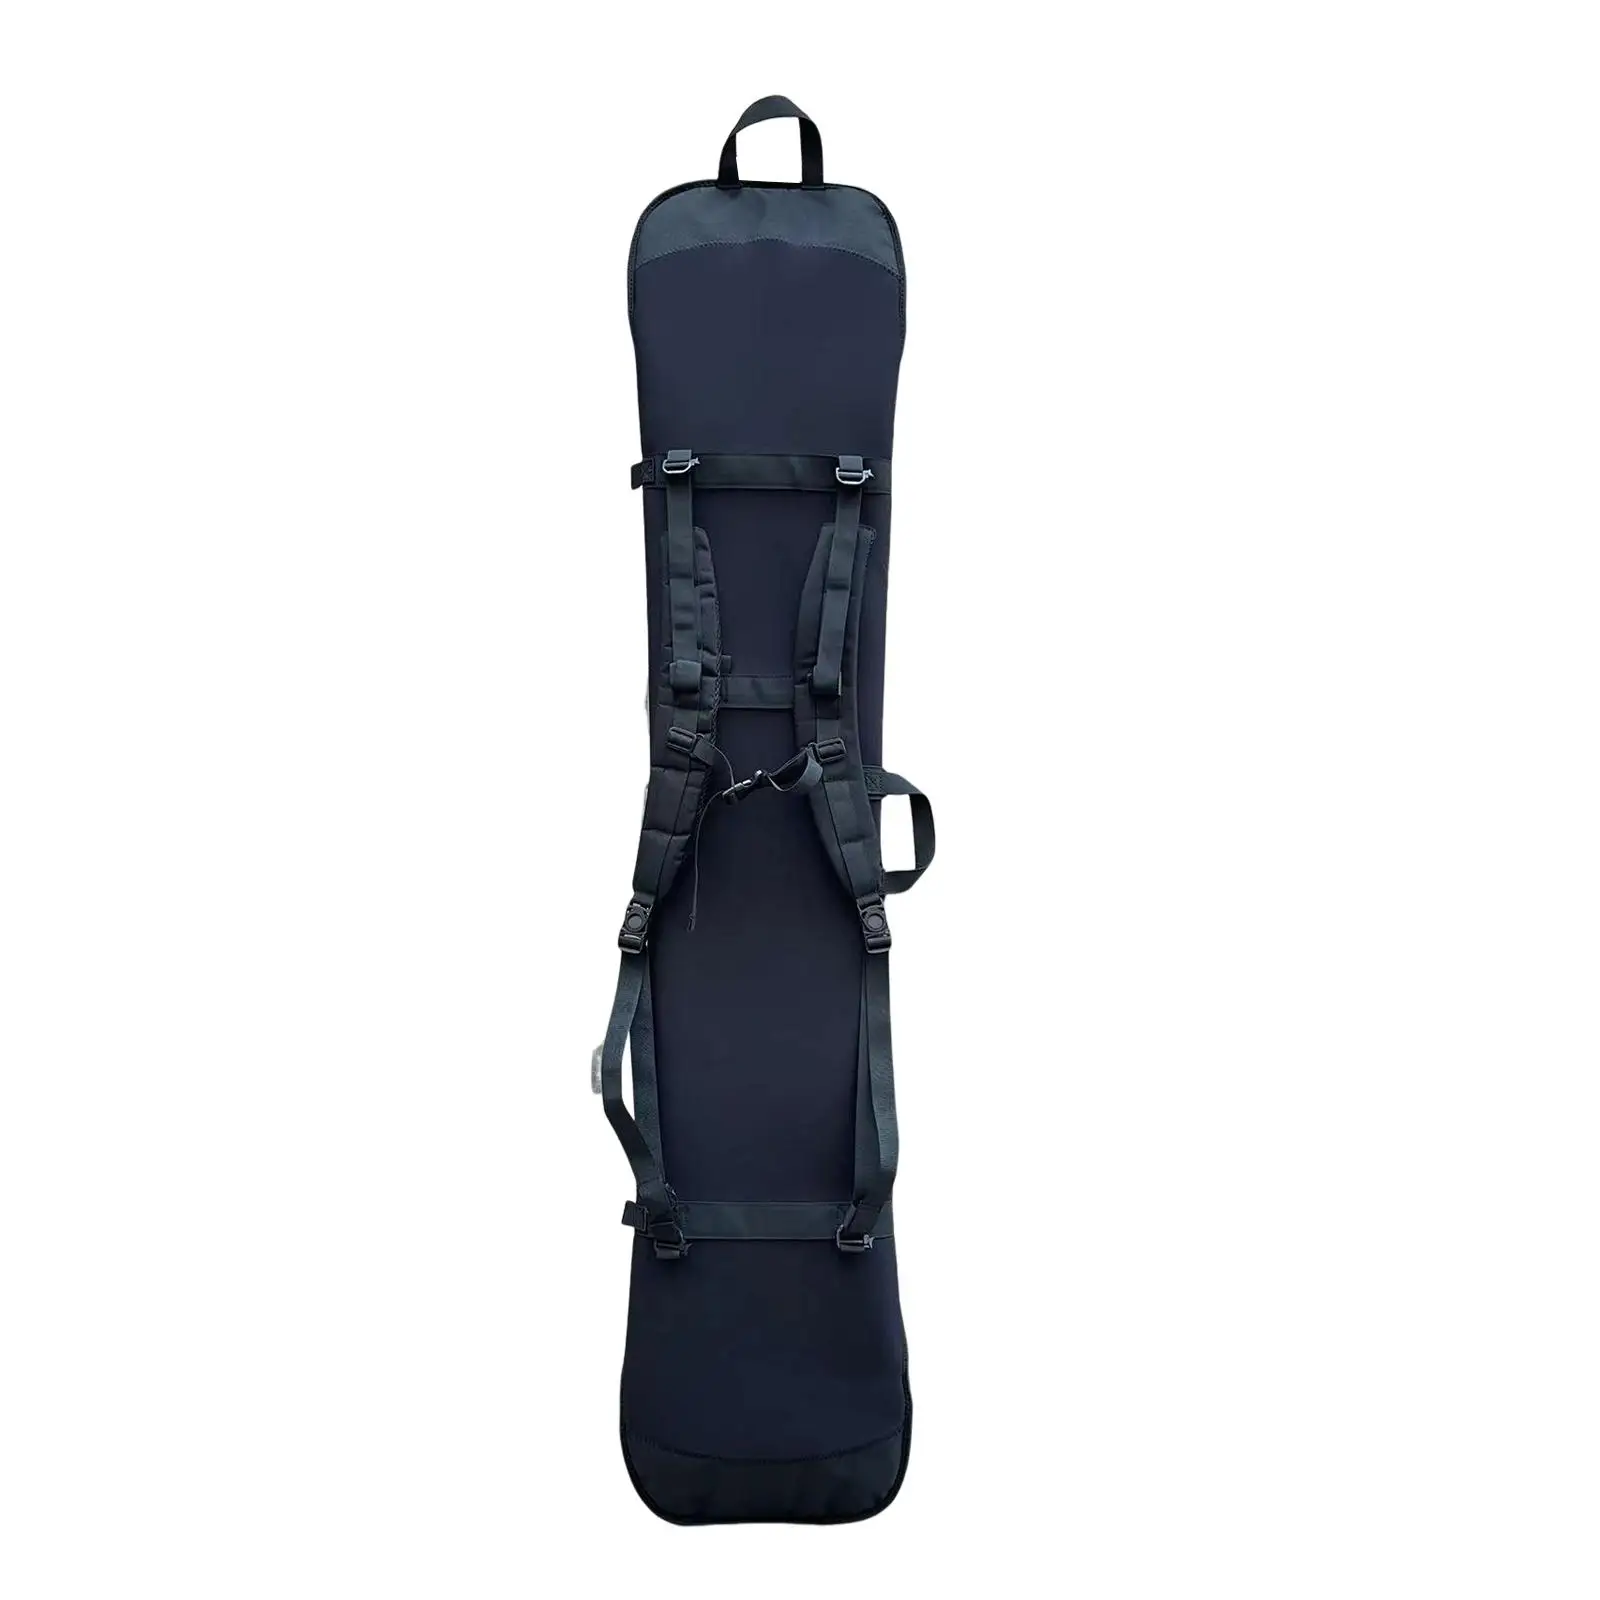 Skiing Snowboard Bag Adjustable Shoulder Straps Detachable Storage Supplies Protection 163cm Cover for Winter Sports Backpack